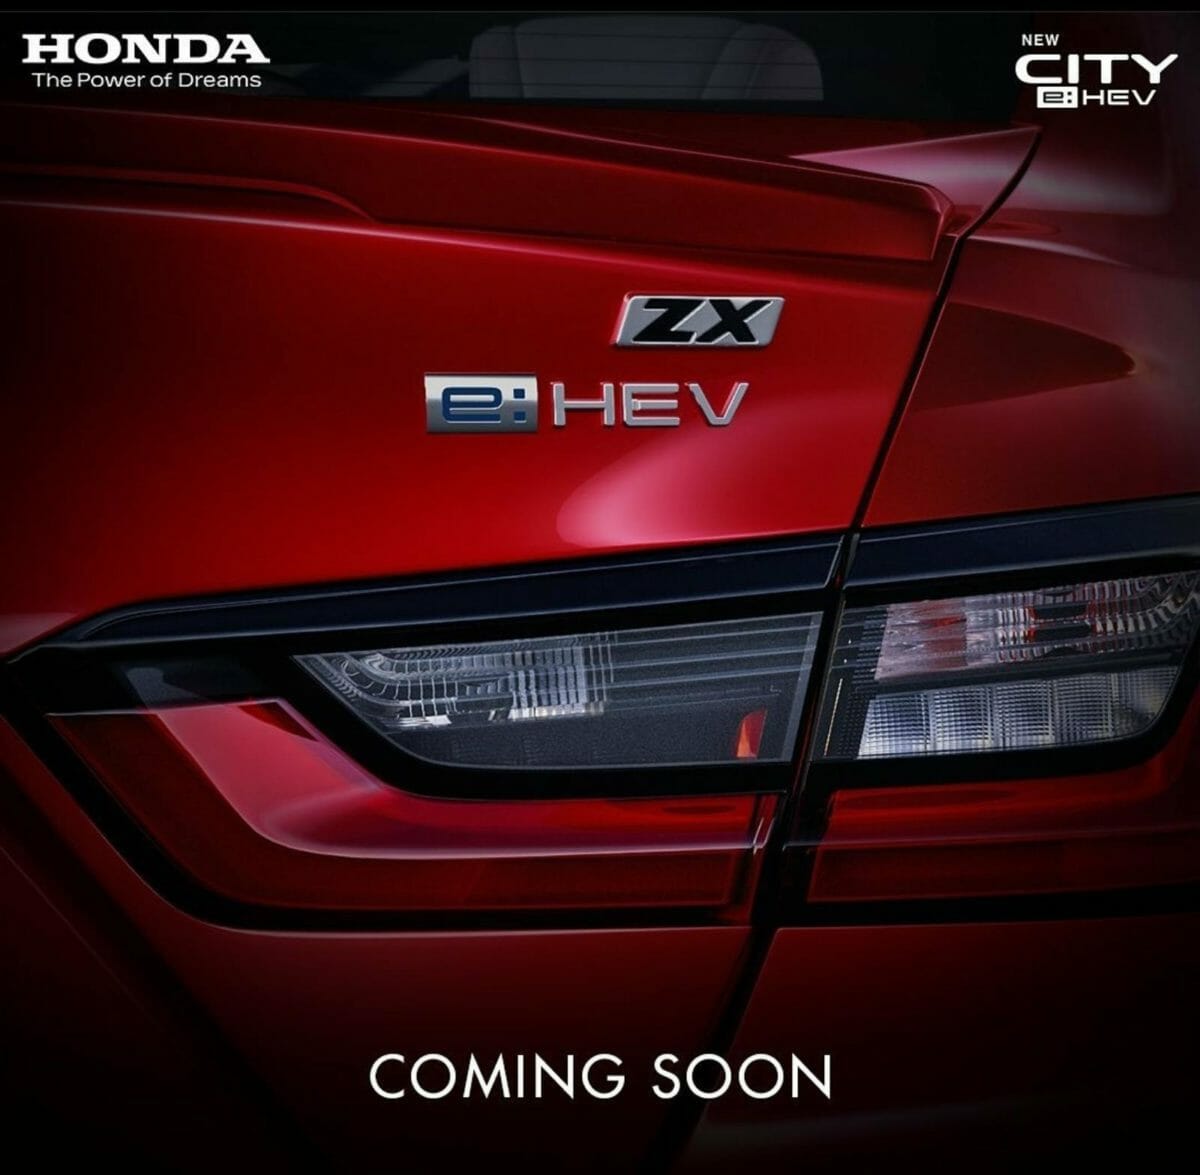 Honda City Hybrid gets teased